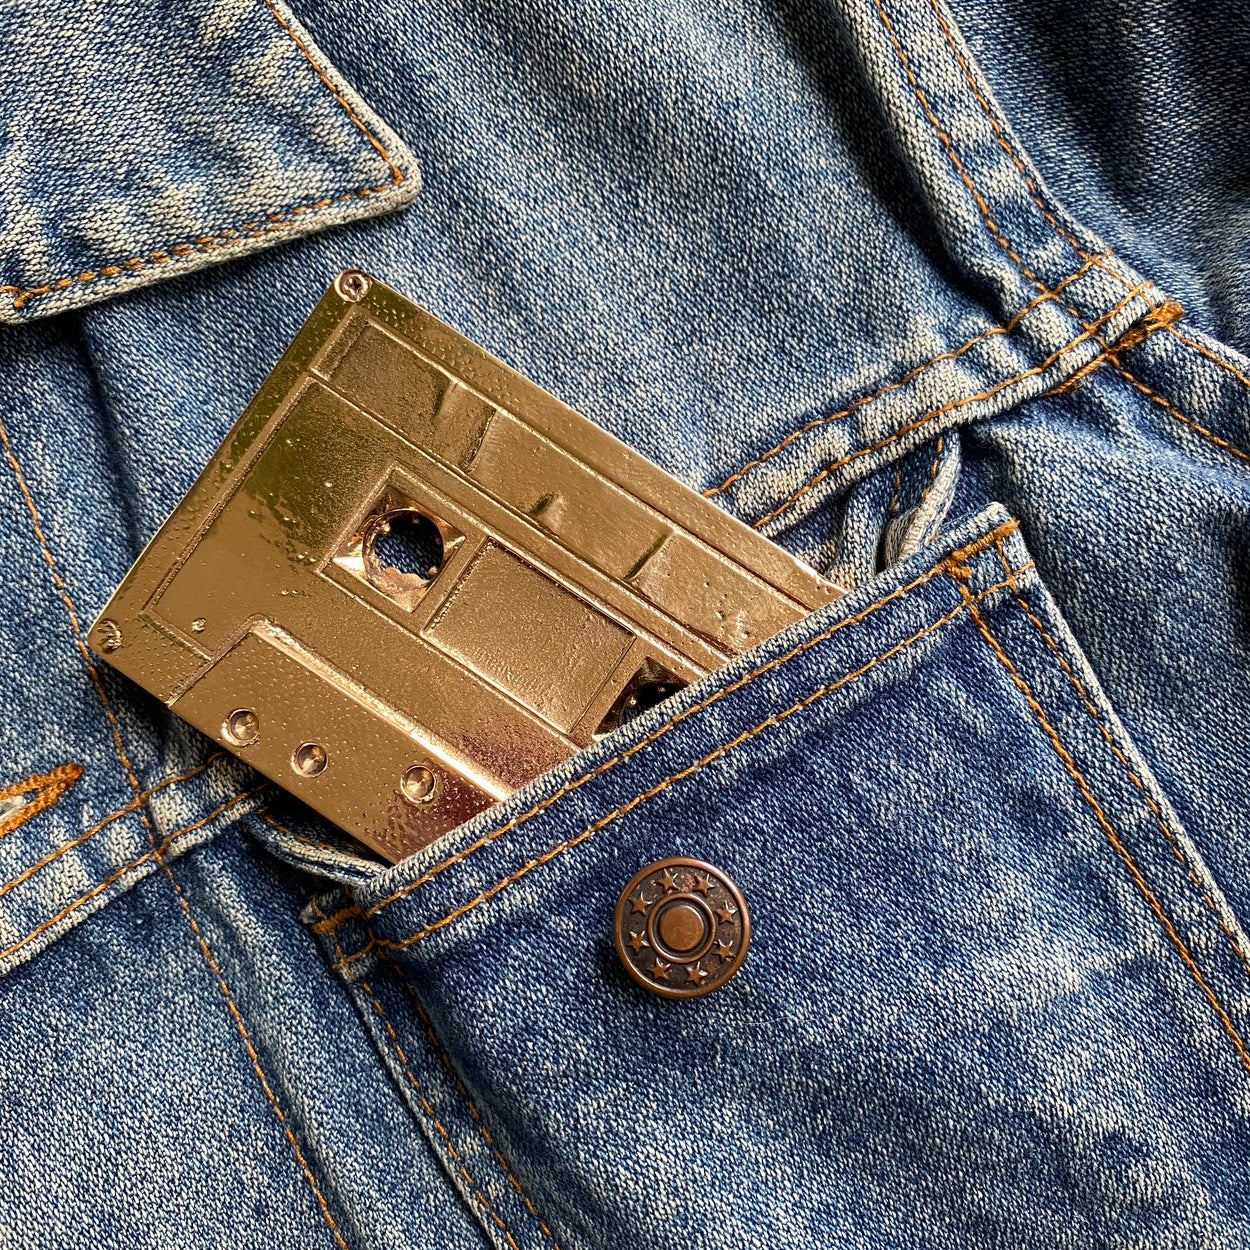 Bronze Cassette Mix Tape by Nancy Pearce half in a denim jacket pocket